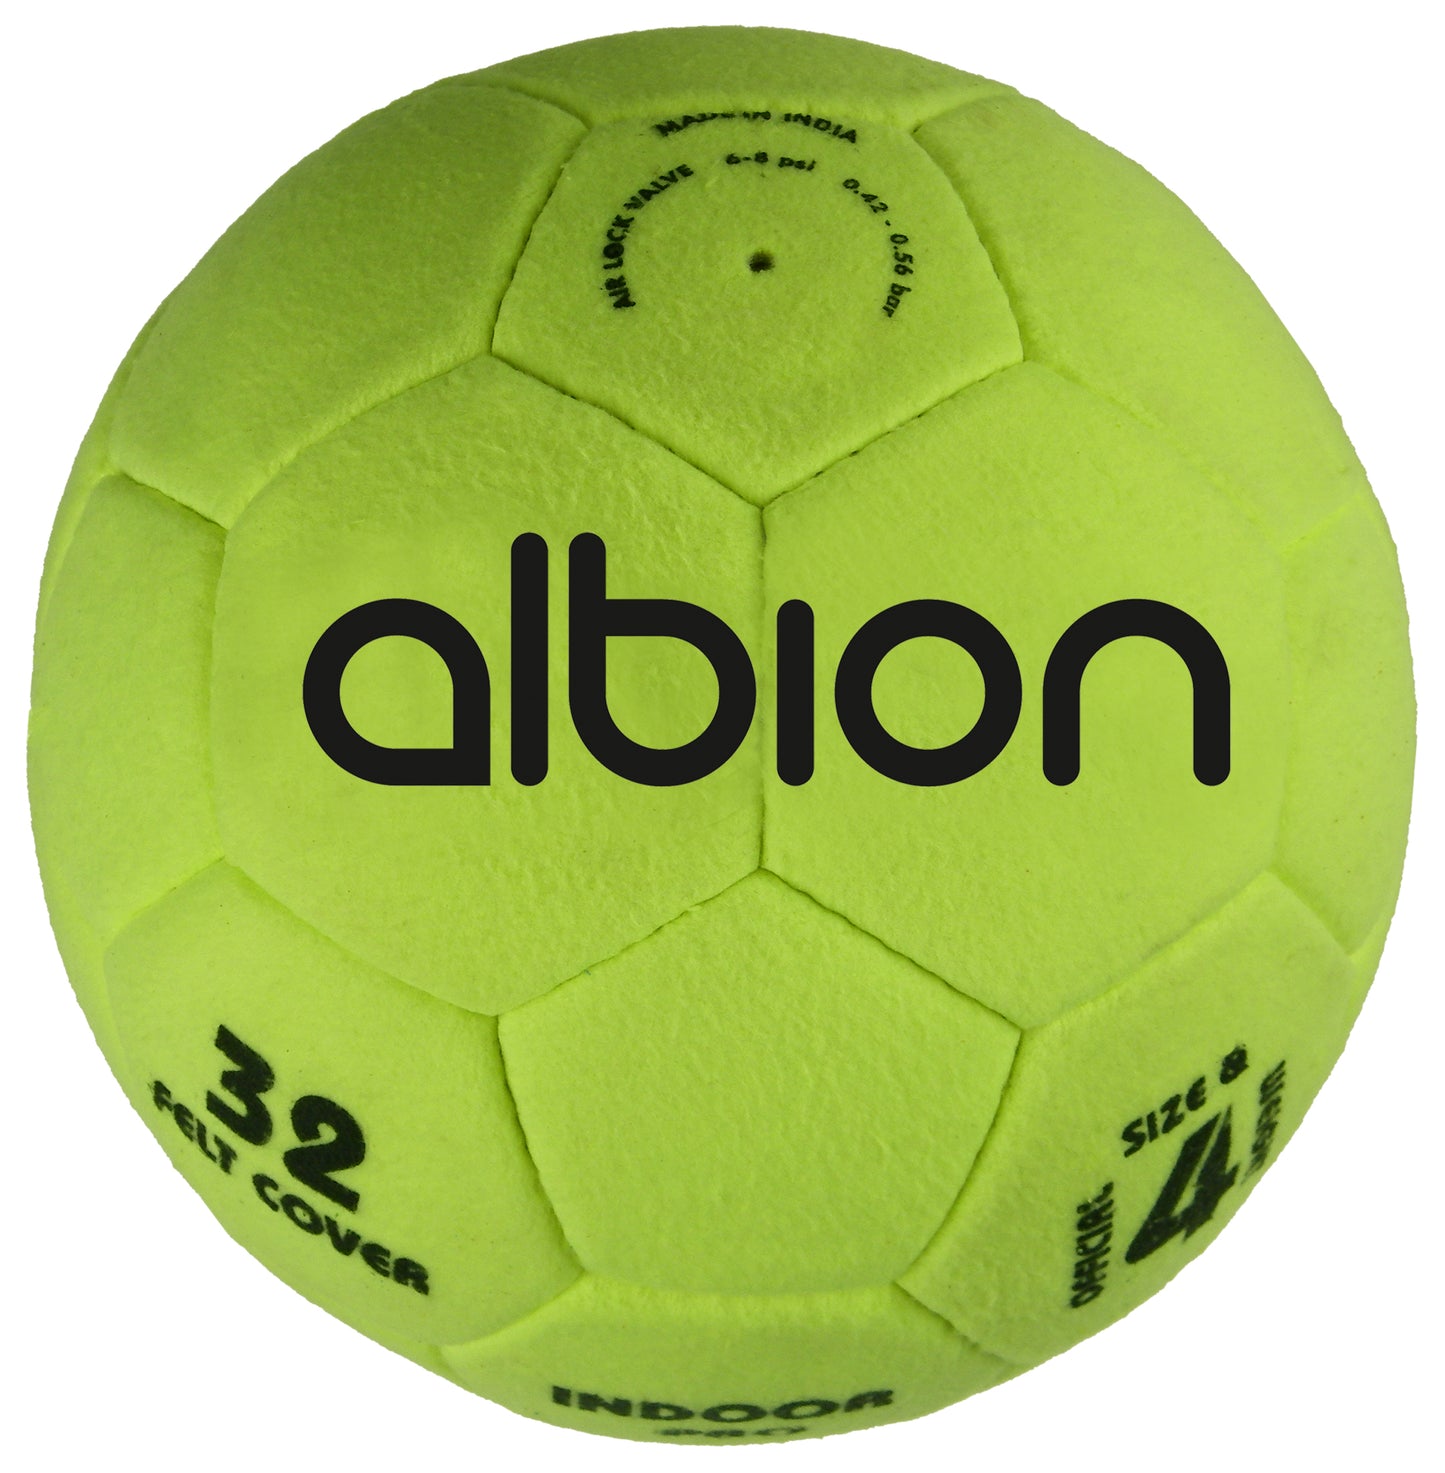 Albion Indoor Football 32